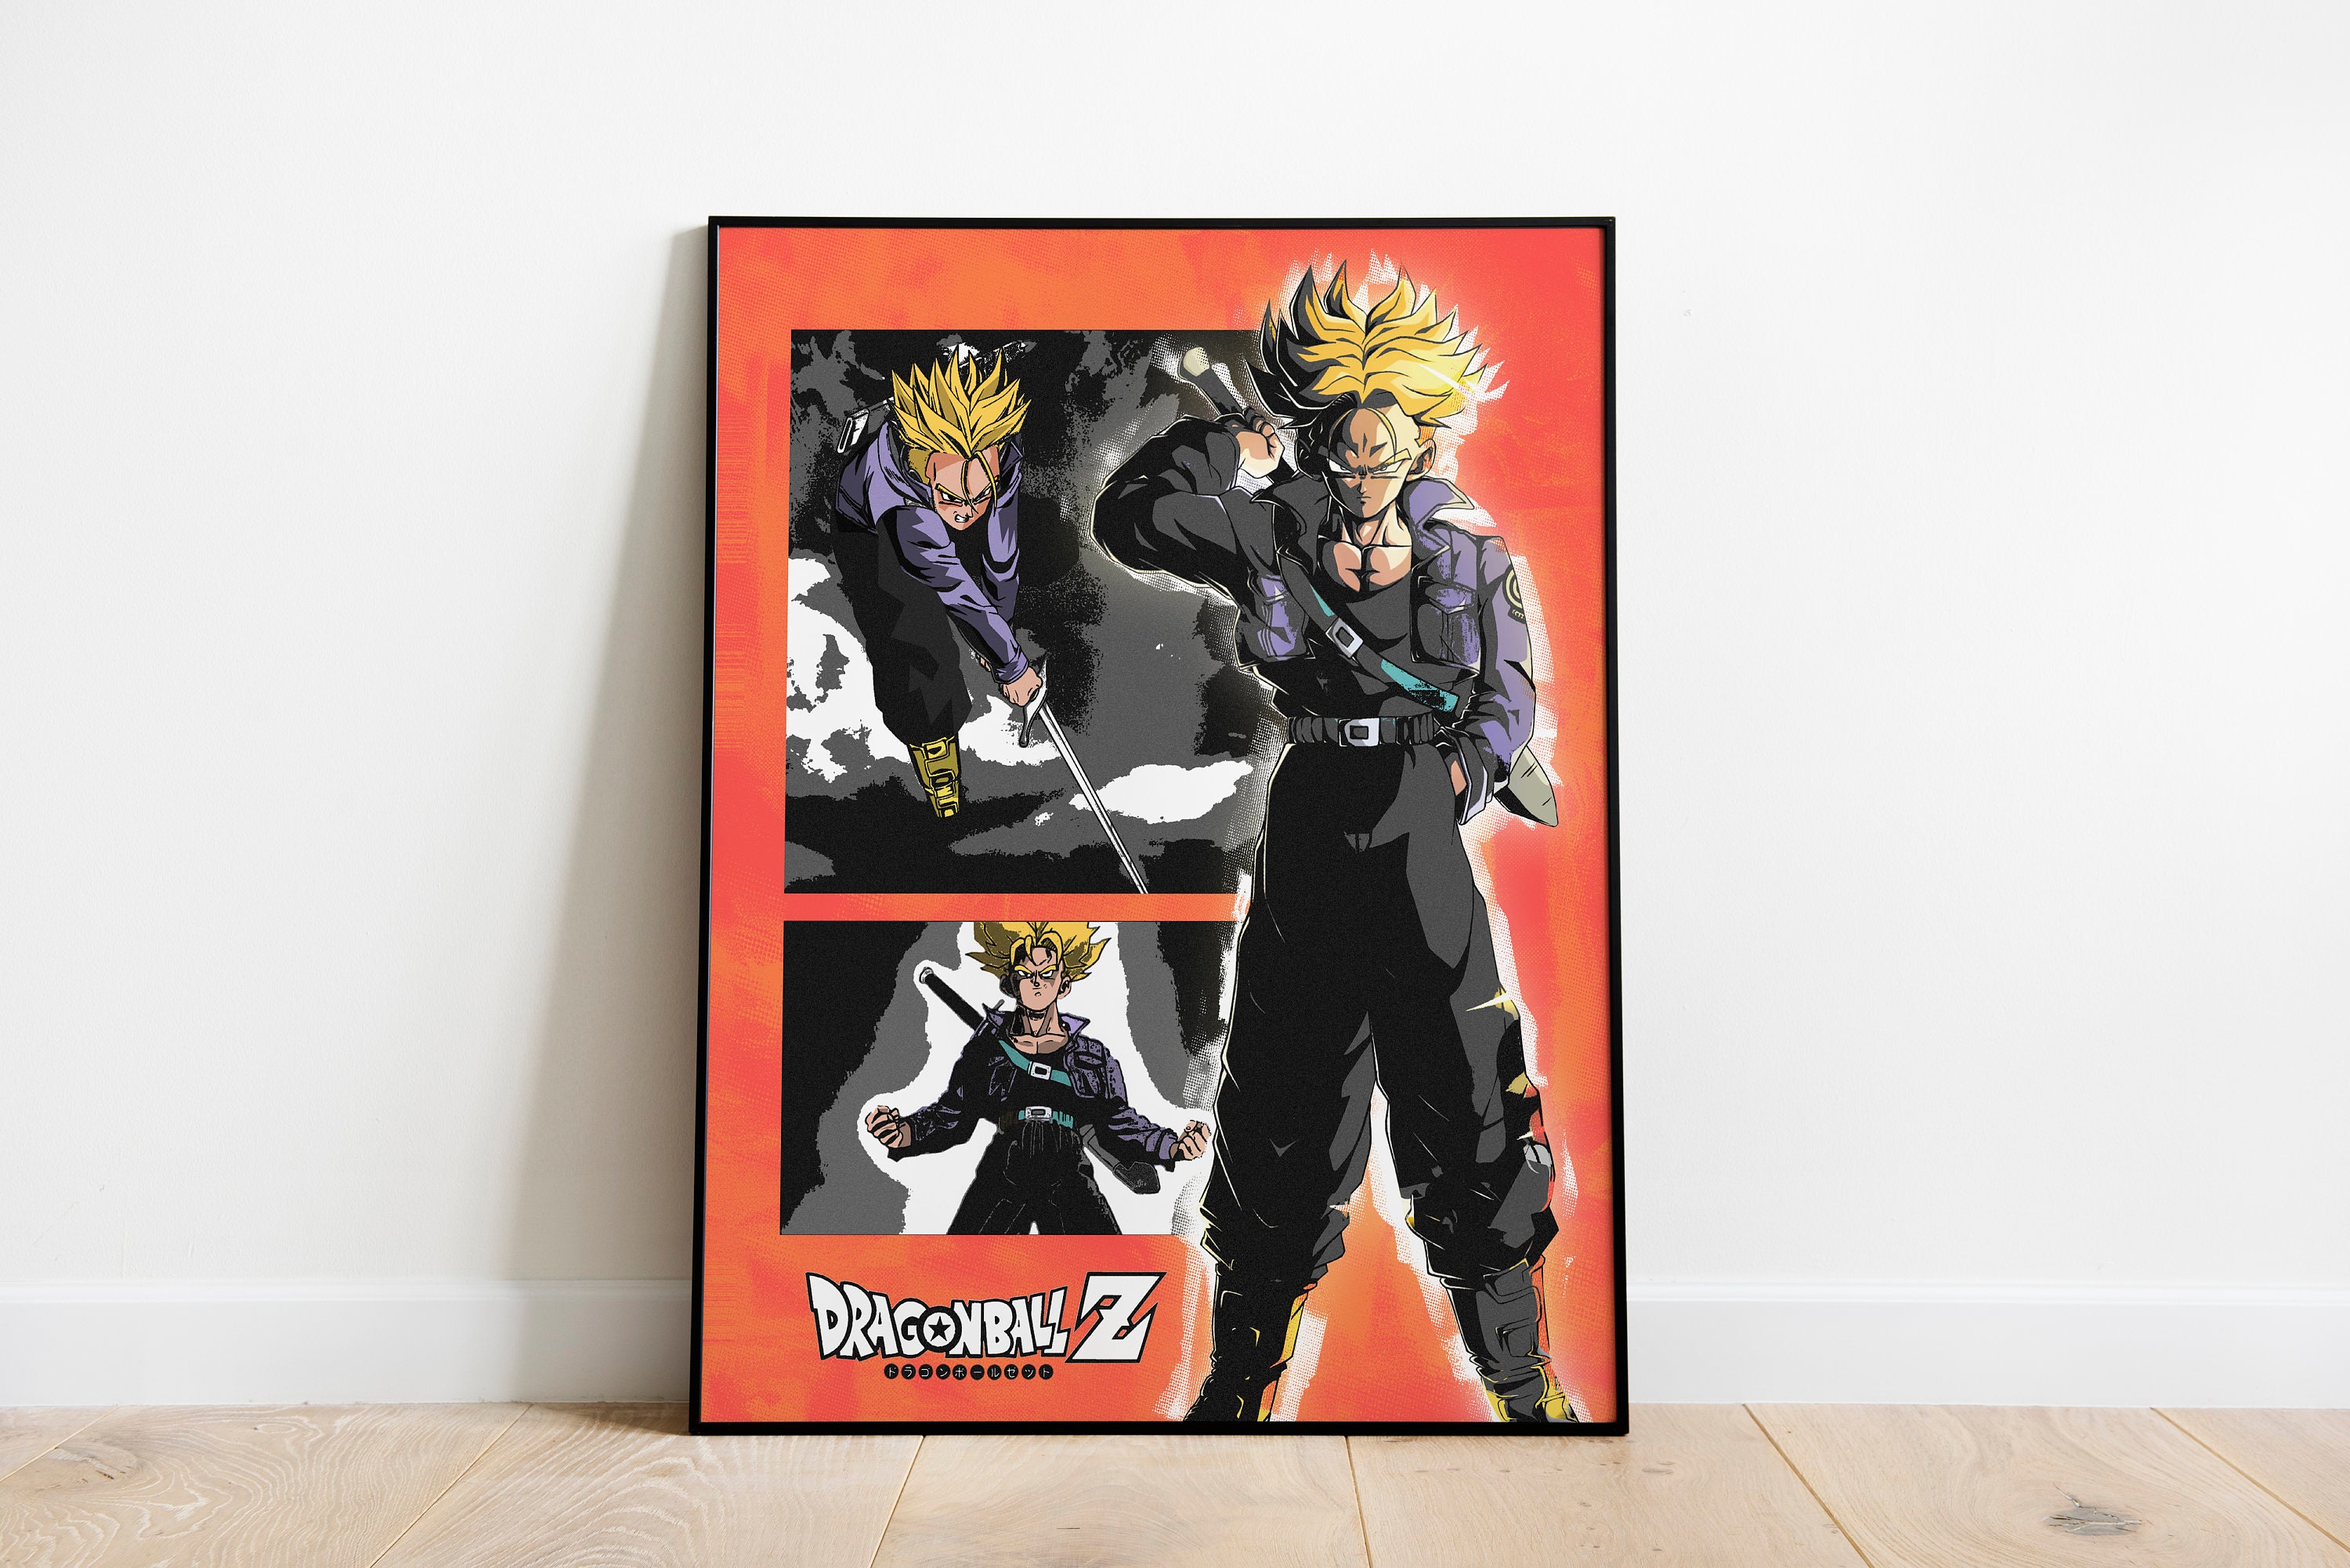 Dragonball Z Poster Anime Collage 24x36 - Dragon Ball Z Wall Art Print  Decor New